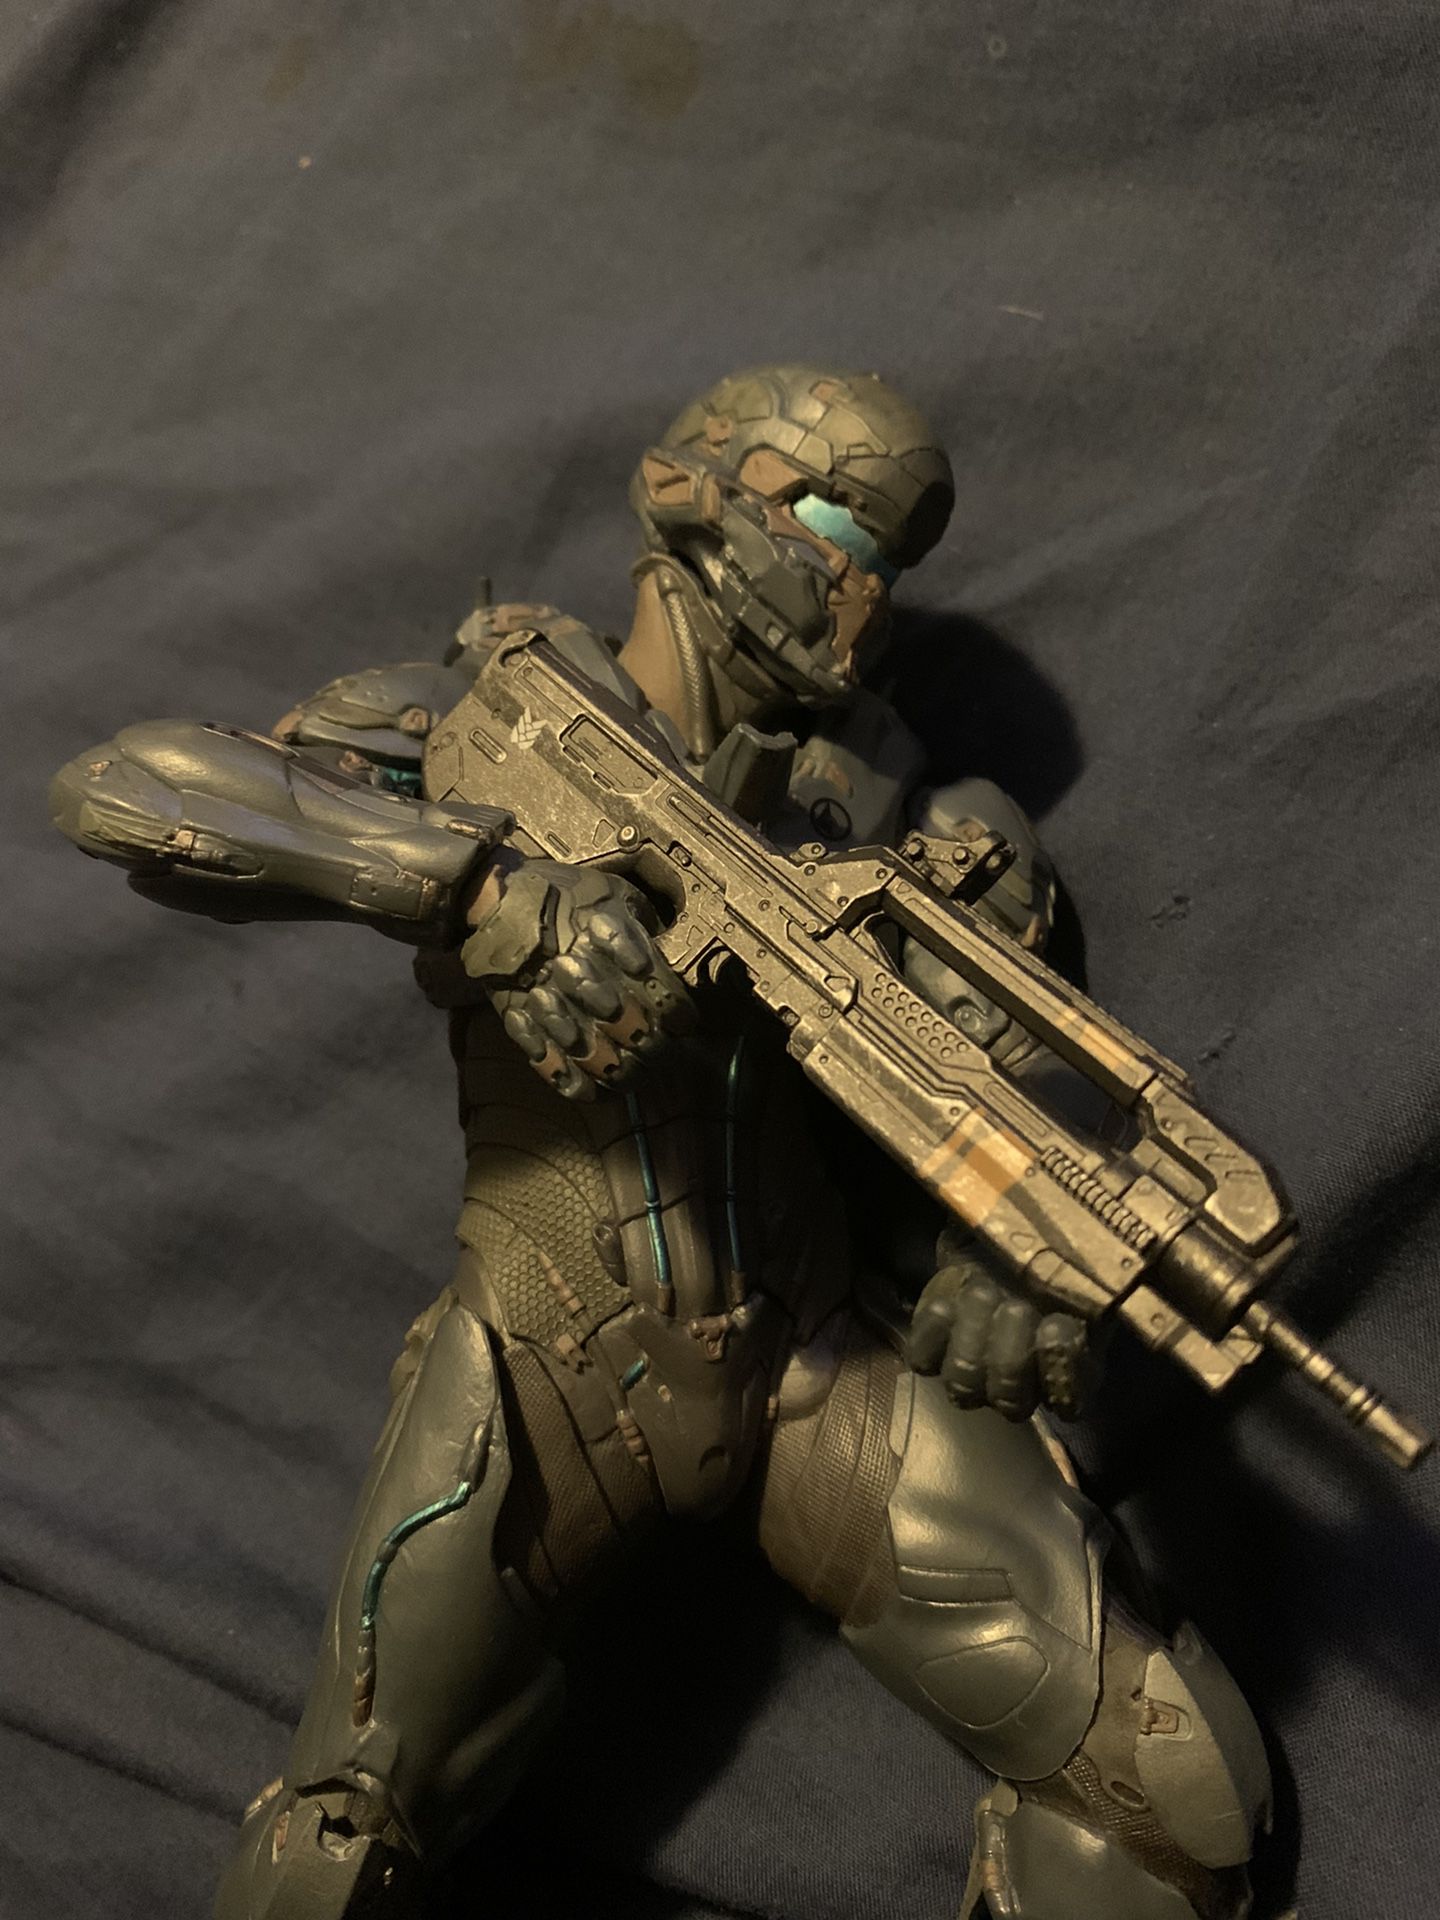 Halo 5 McFarlane Toys 12” Spartan Locke Figure